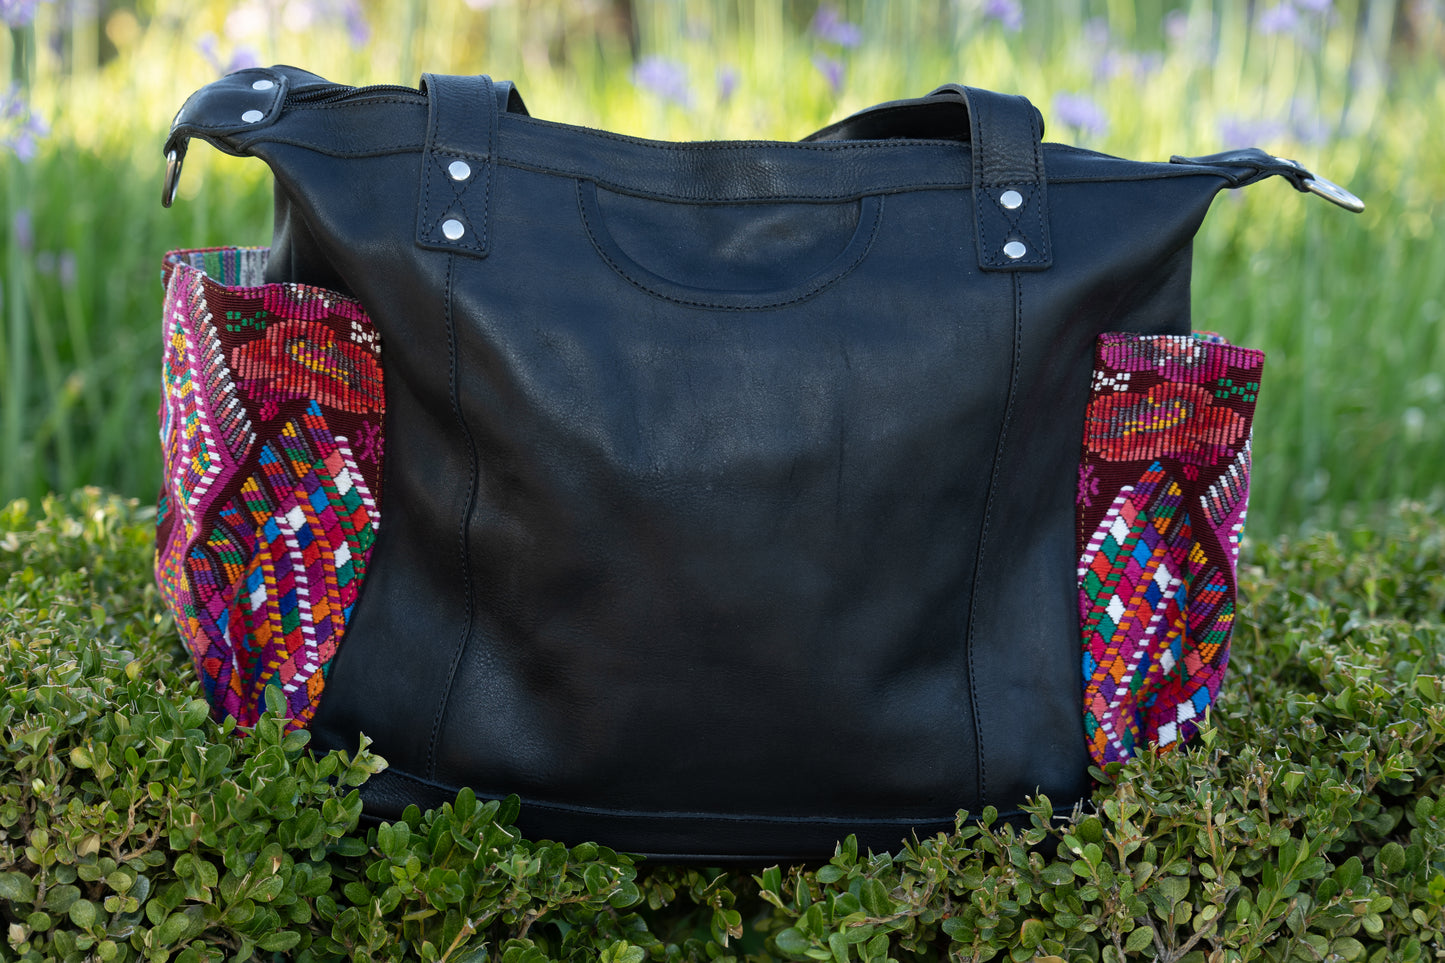 Artisan Bag Convertible Day Bag 100% black full grain leather with huipil pockets